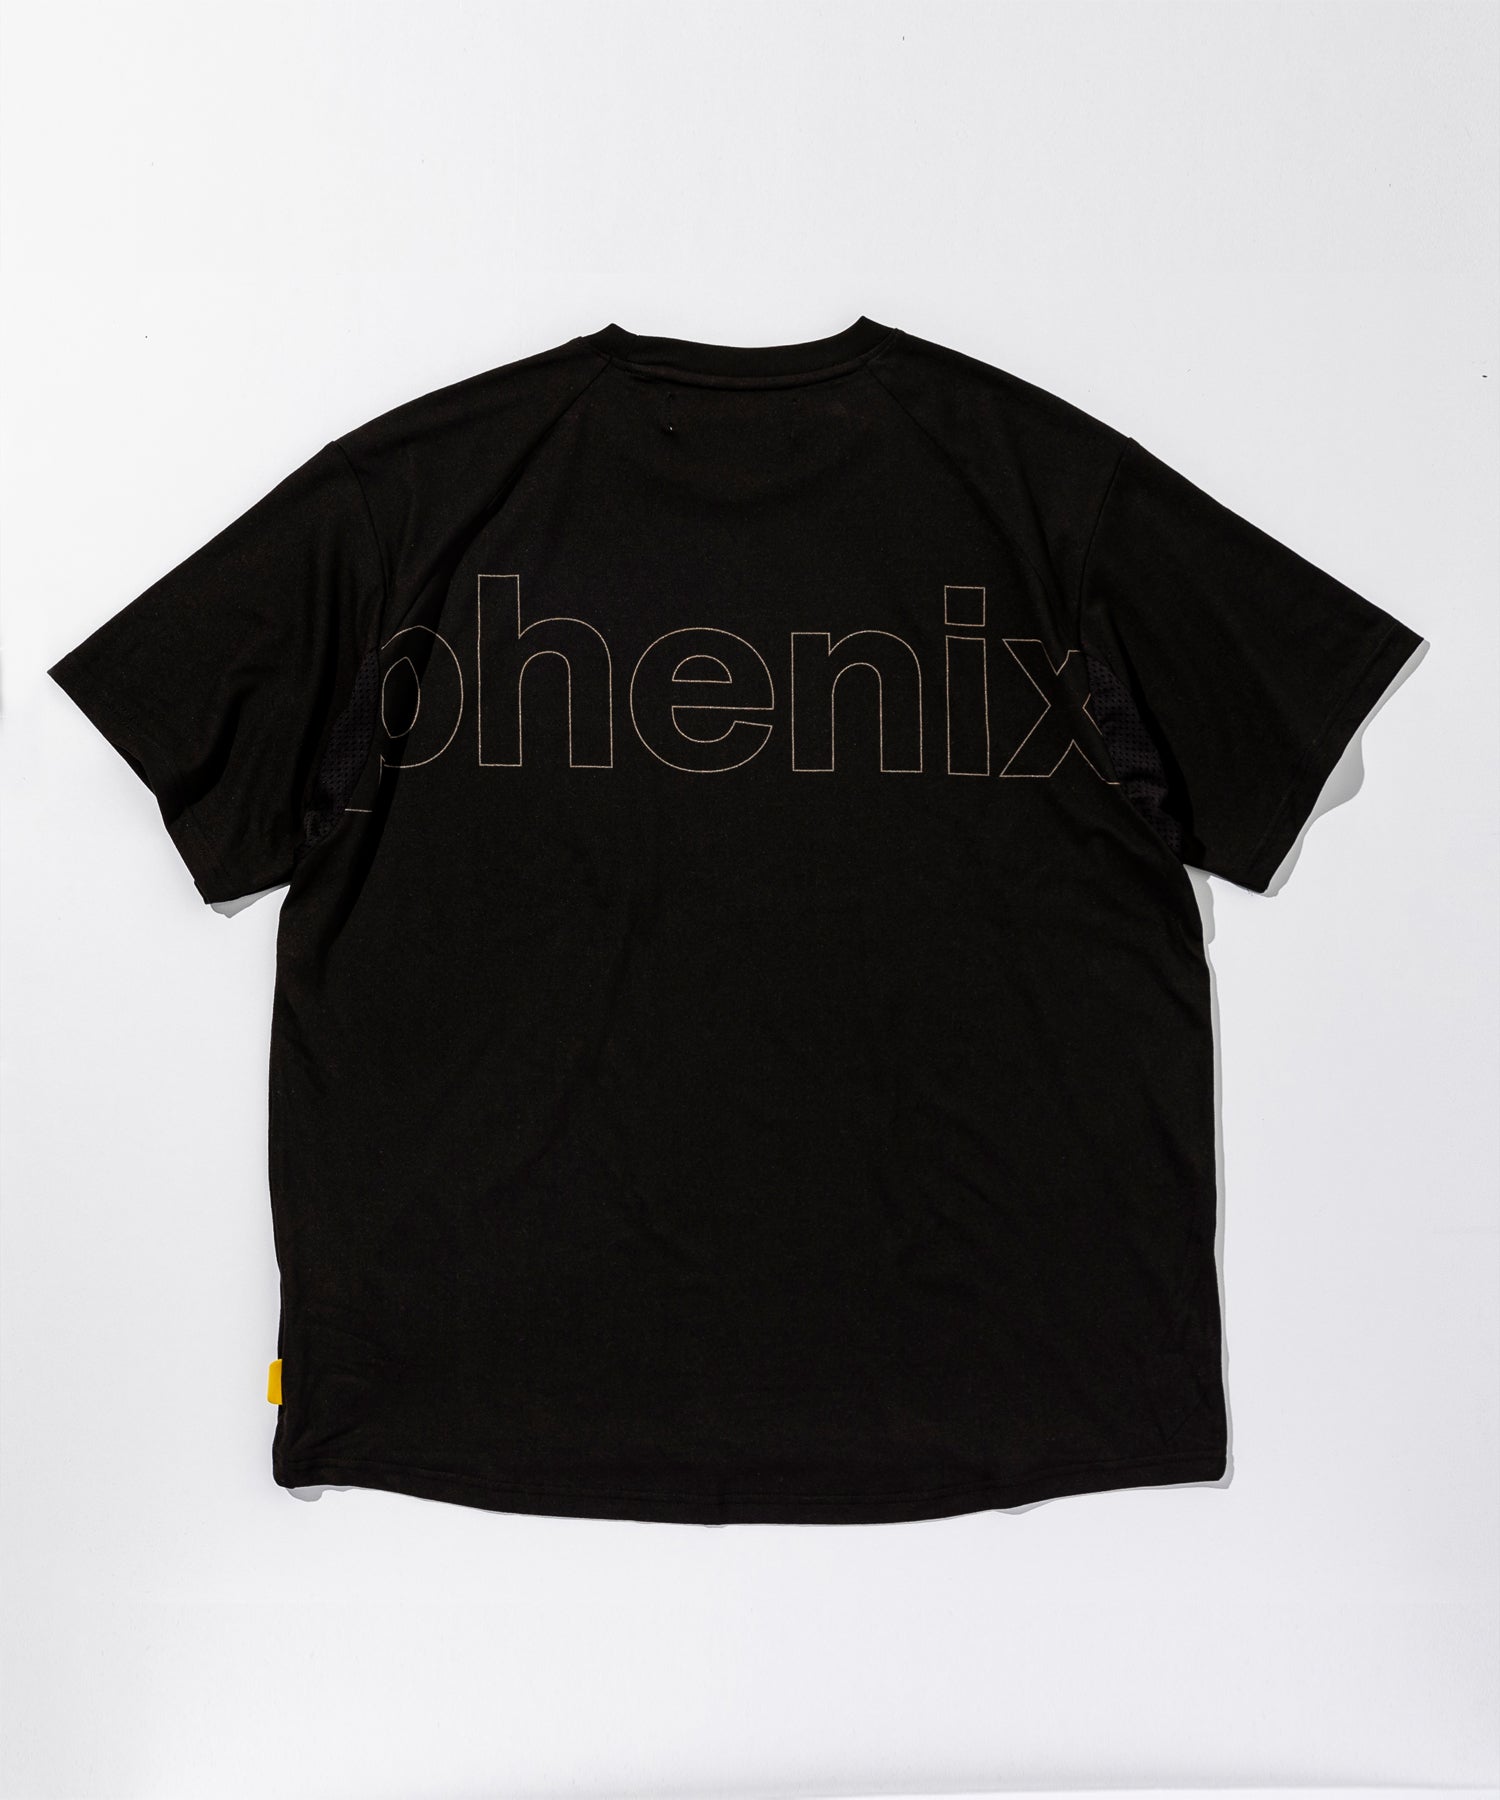 【MENS】速乾Tシャツ Mesh Parts T-Shirt テックウェア アーバンアウトドア 高機能ウェア +phenix(プラスフェニックス)